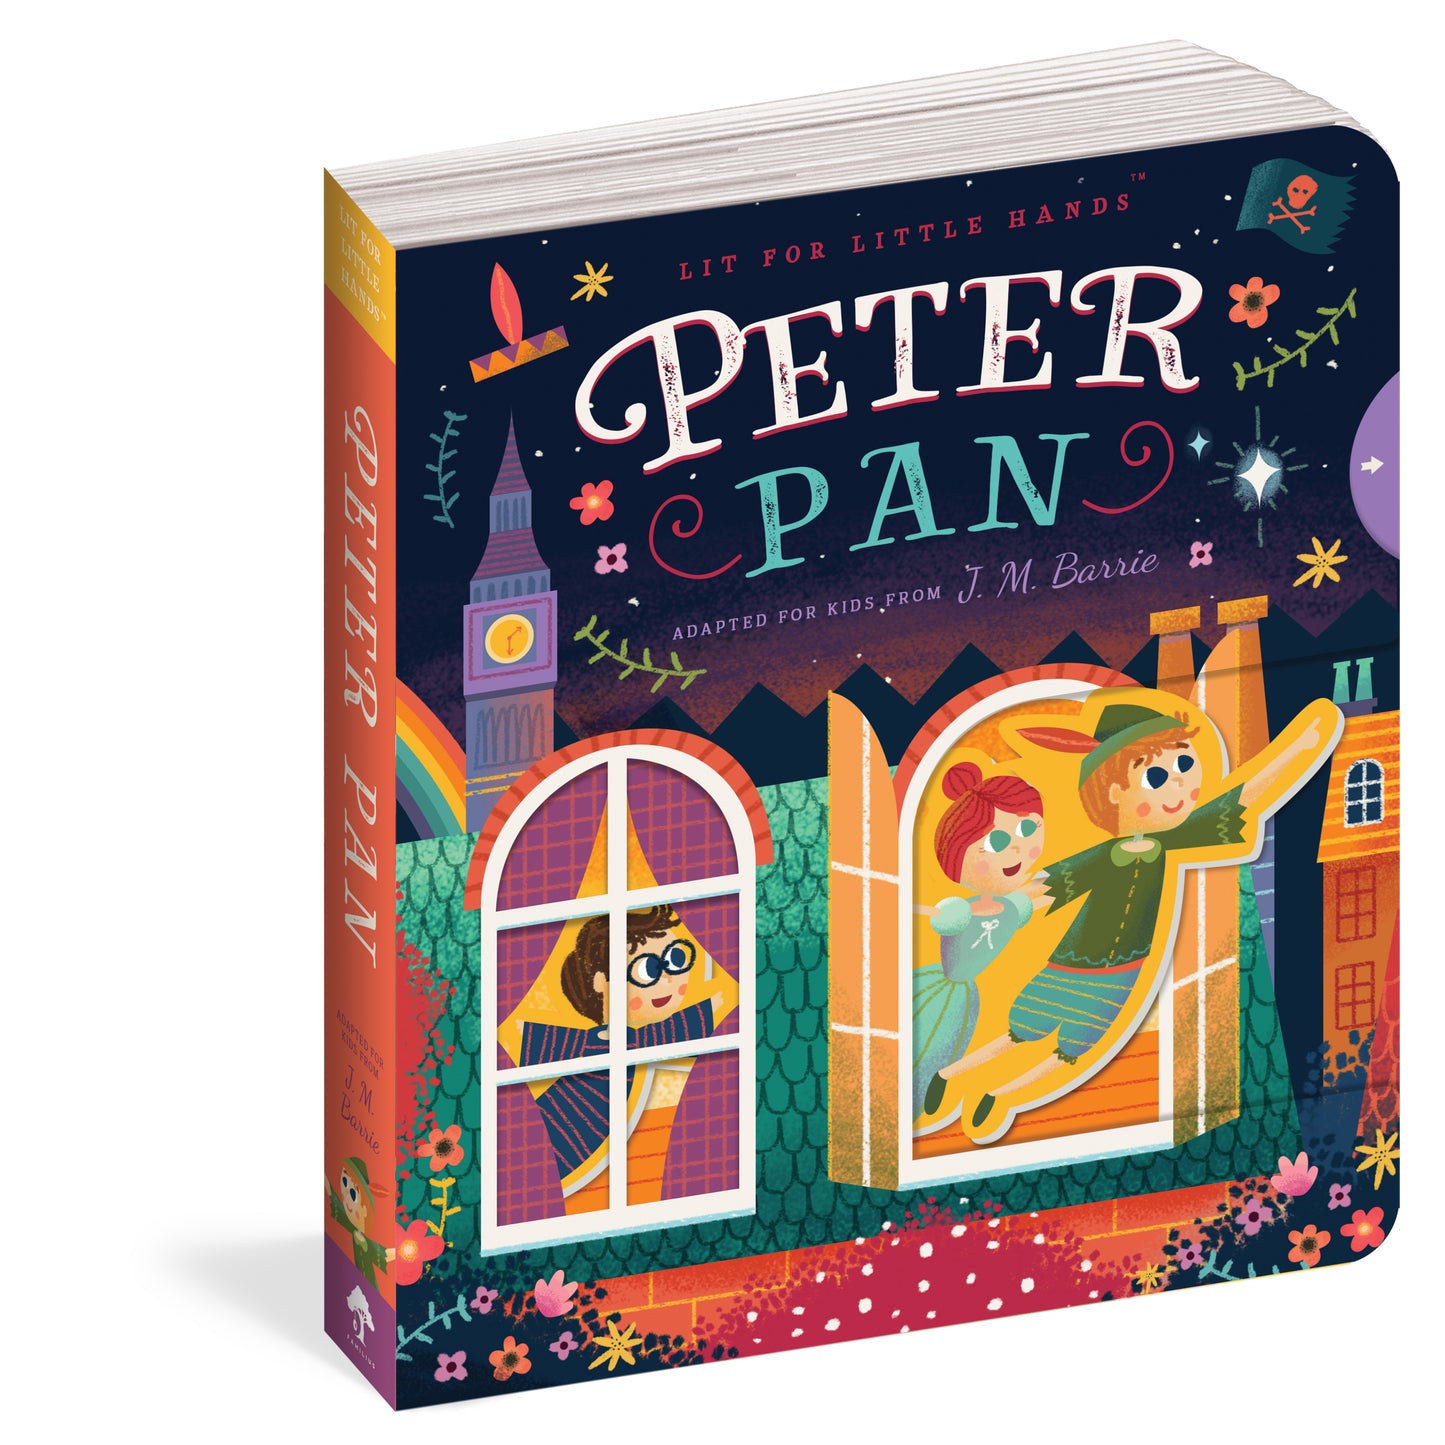 Lit for Little Hands: Peter Pan